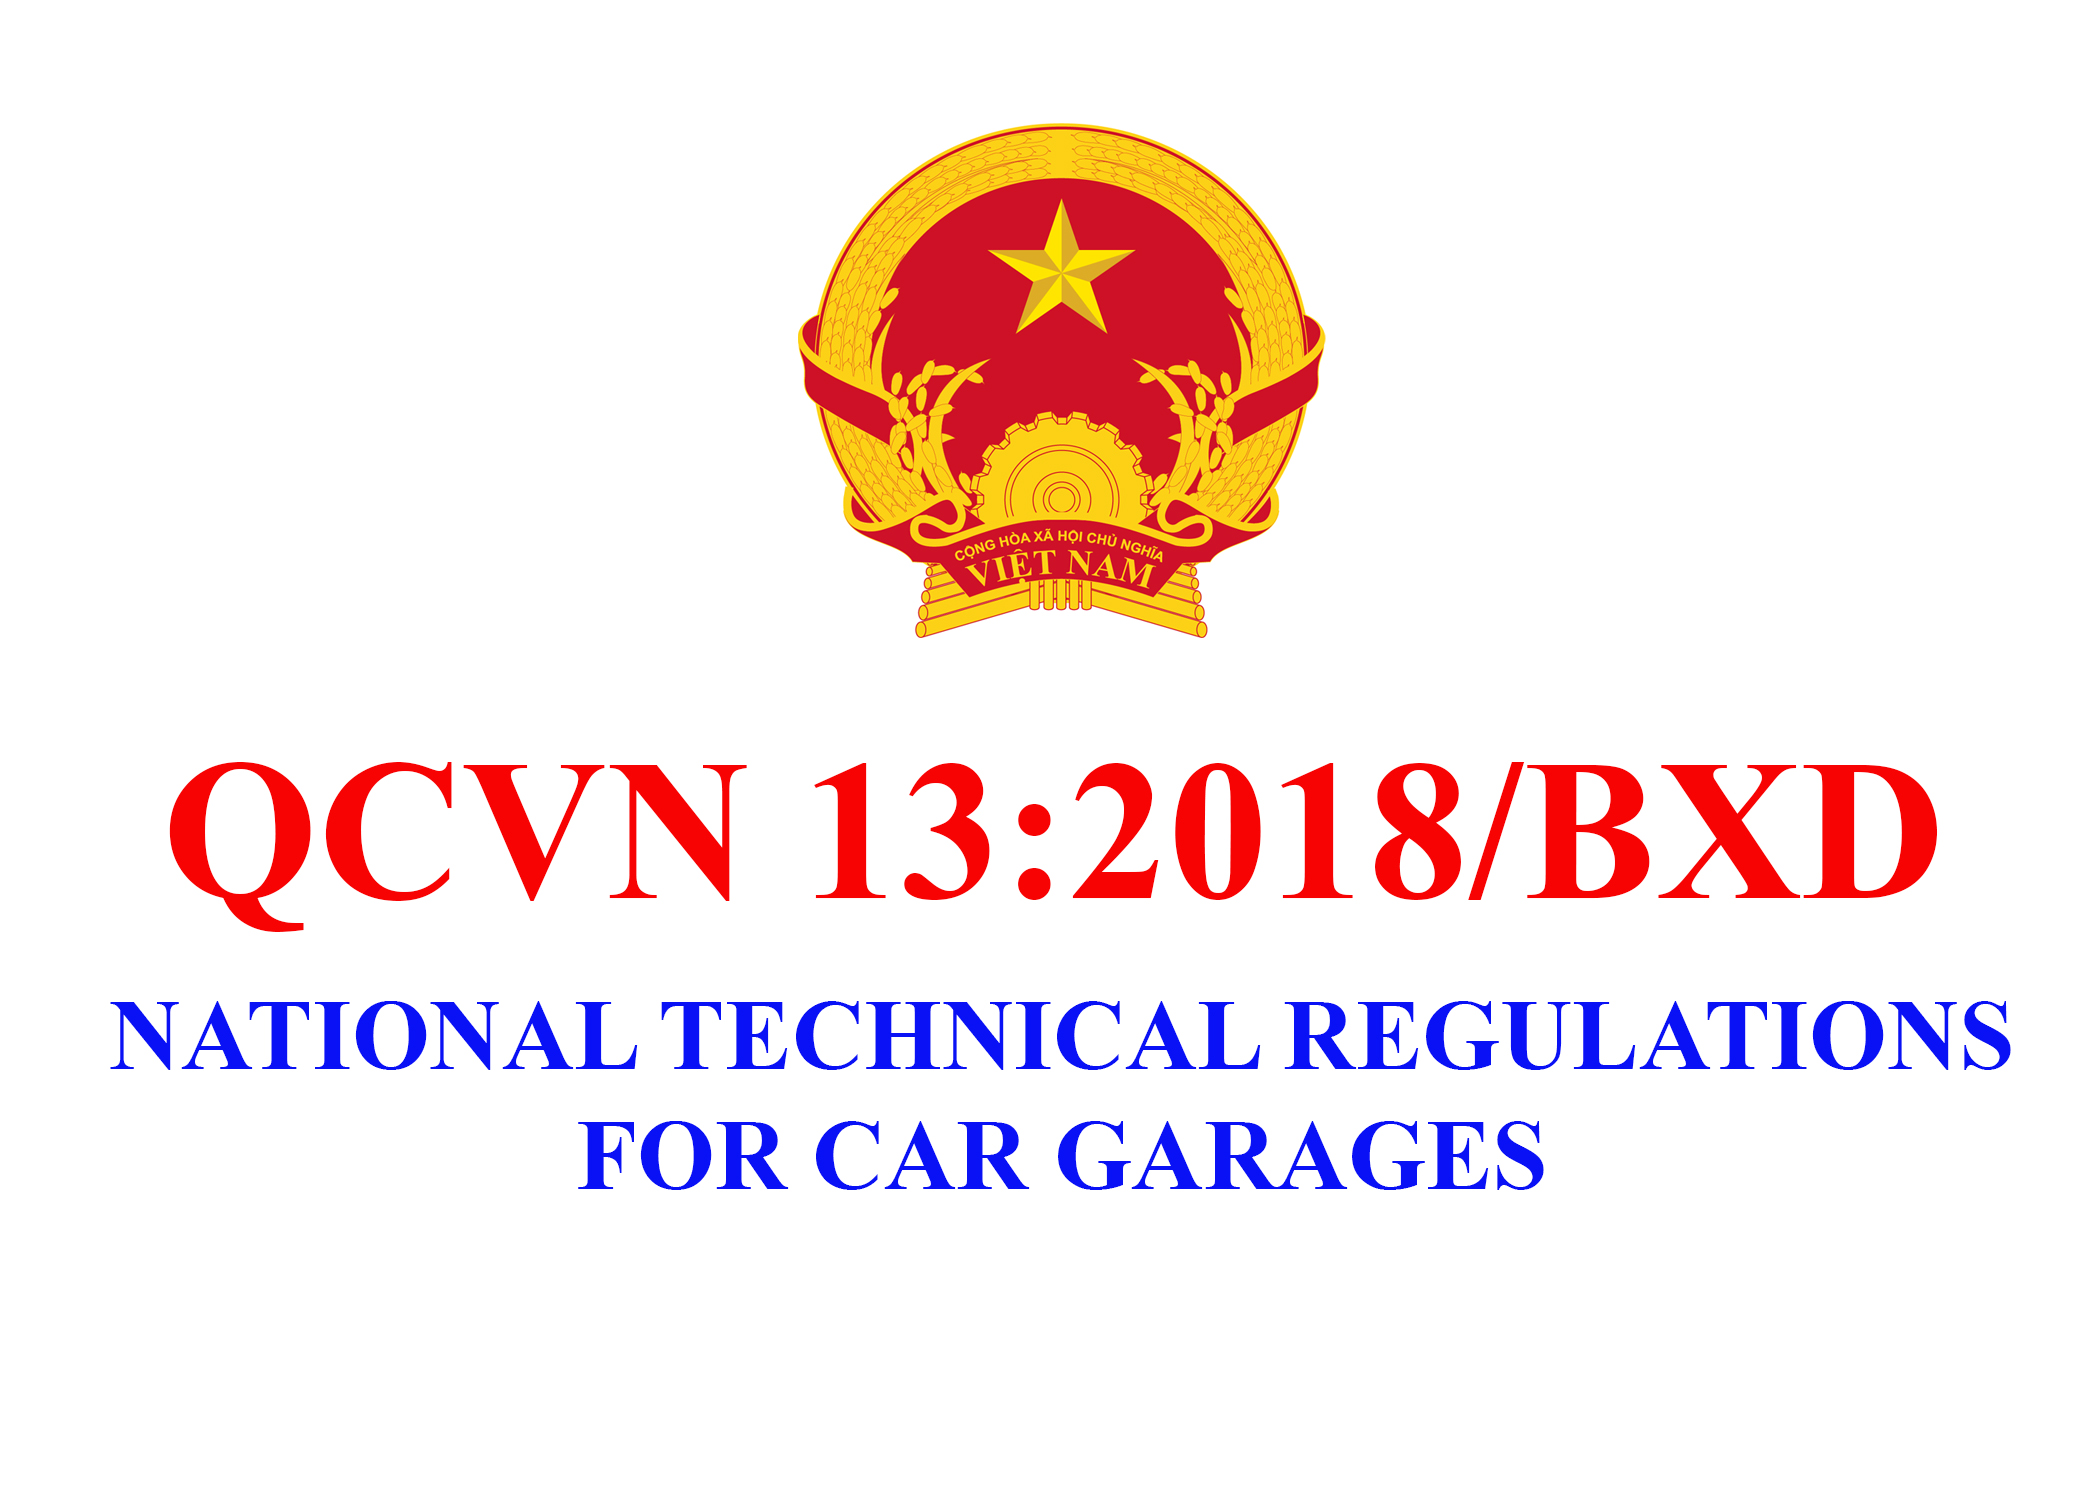 Guidelines on QCVN 13:2018/BXD National Technical Regulations for Car Garages